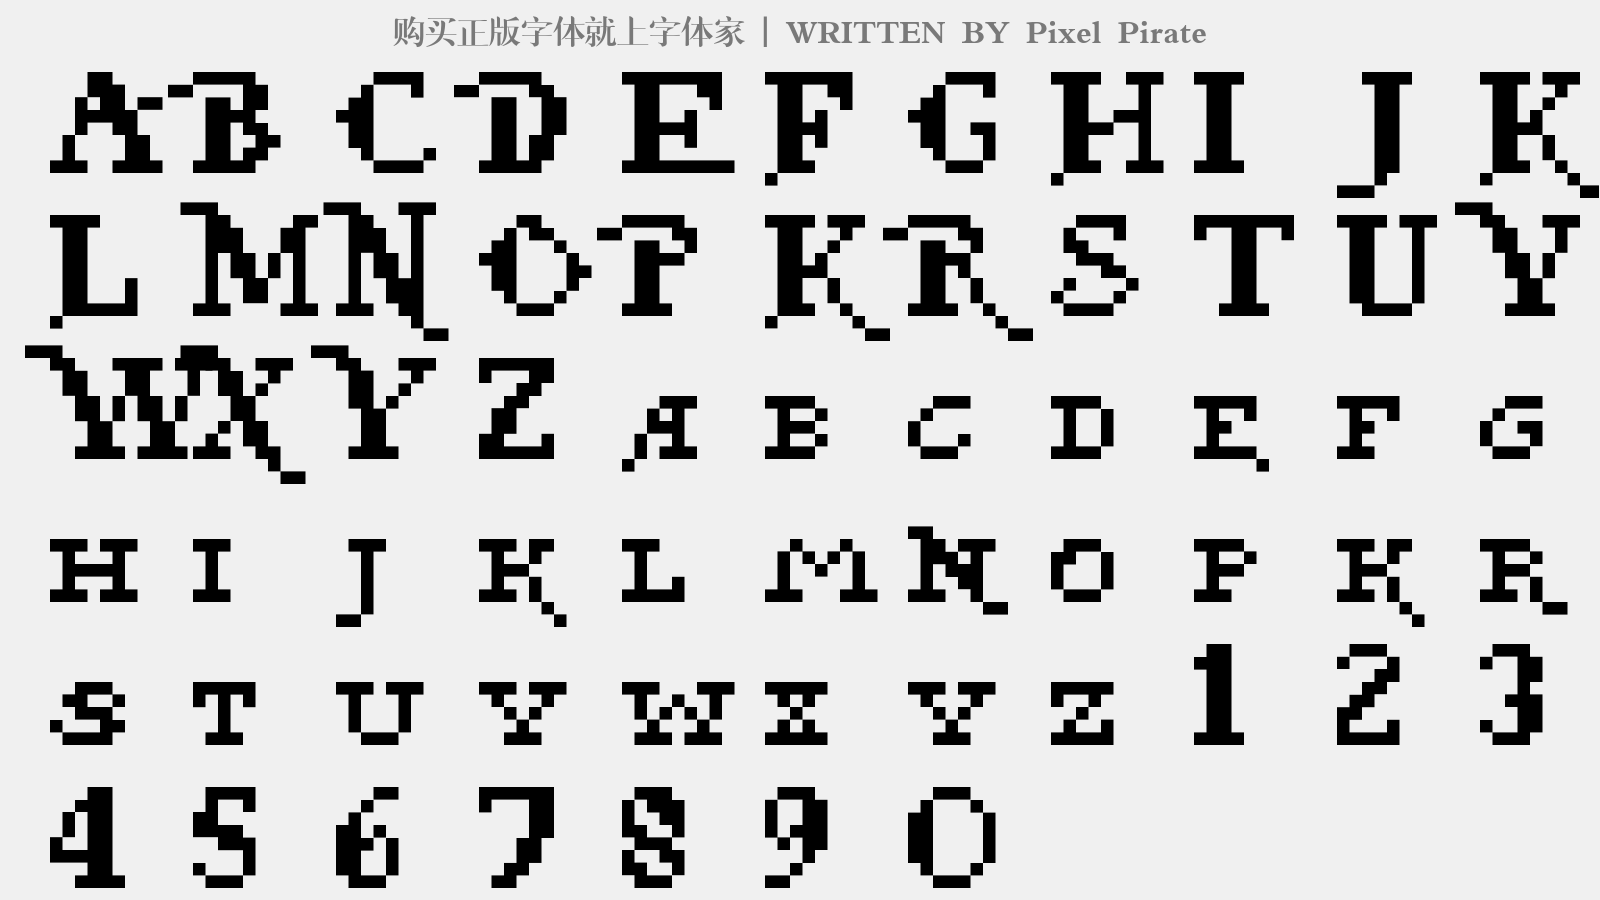 Pixel Pirate - 大写字母/小写字母/数字